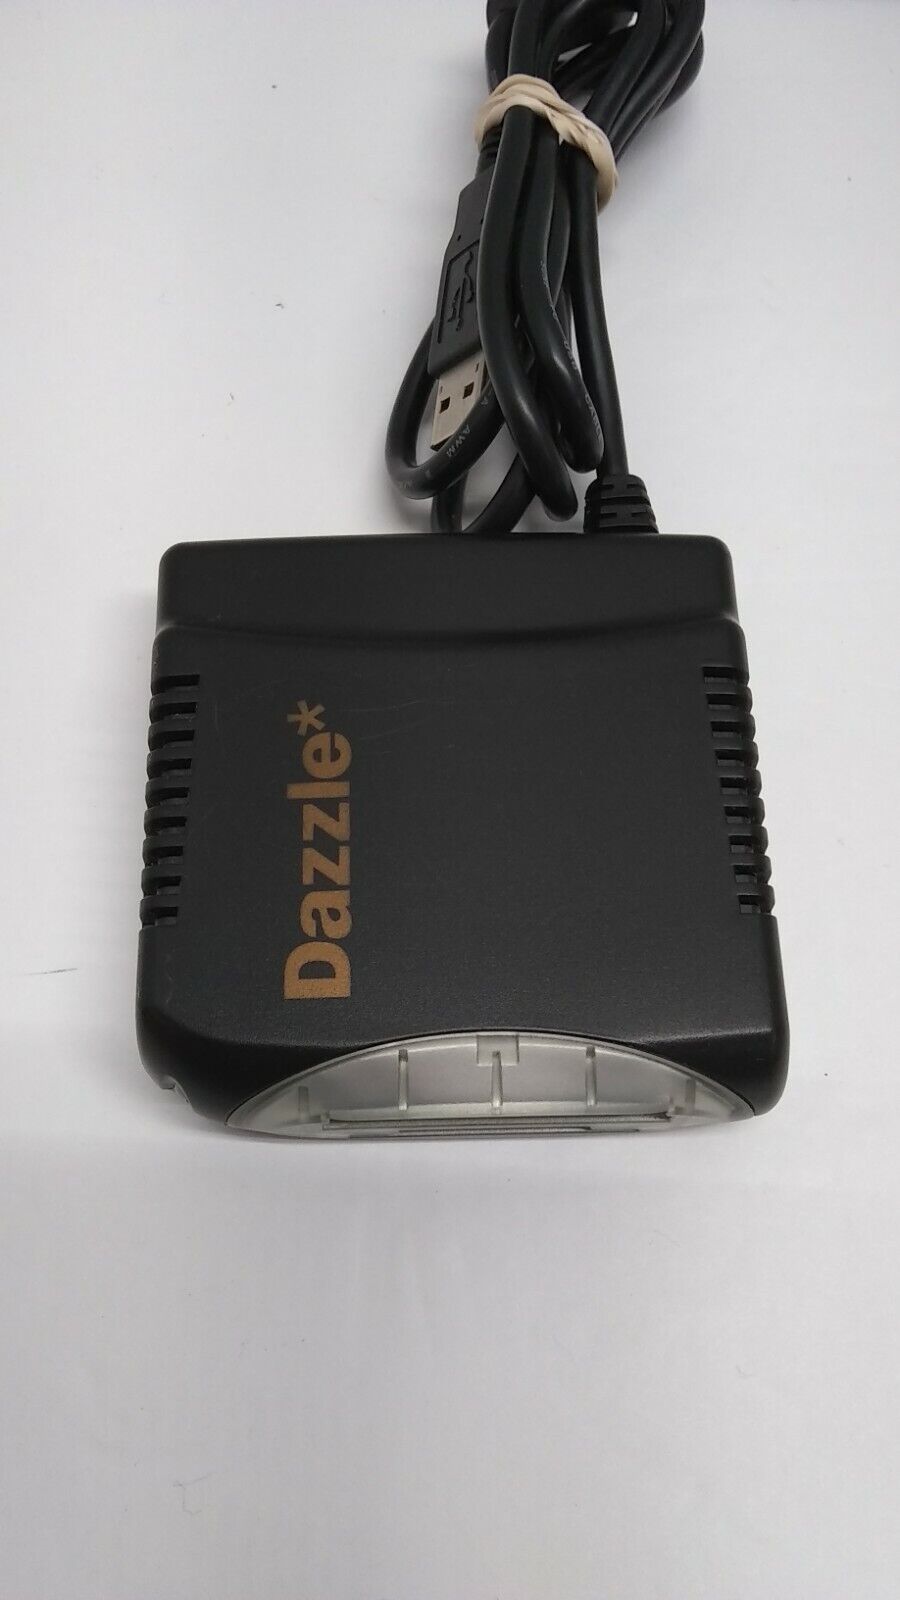 Vintage Dazzle Hi-Speed USB 2.0 Compact Flash Card Reader